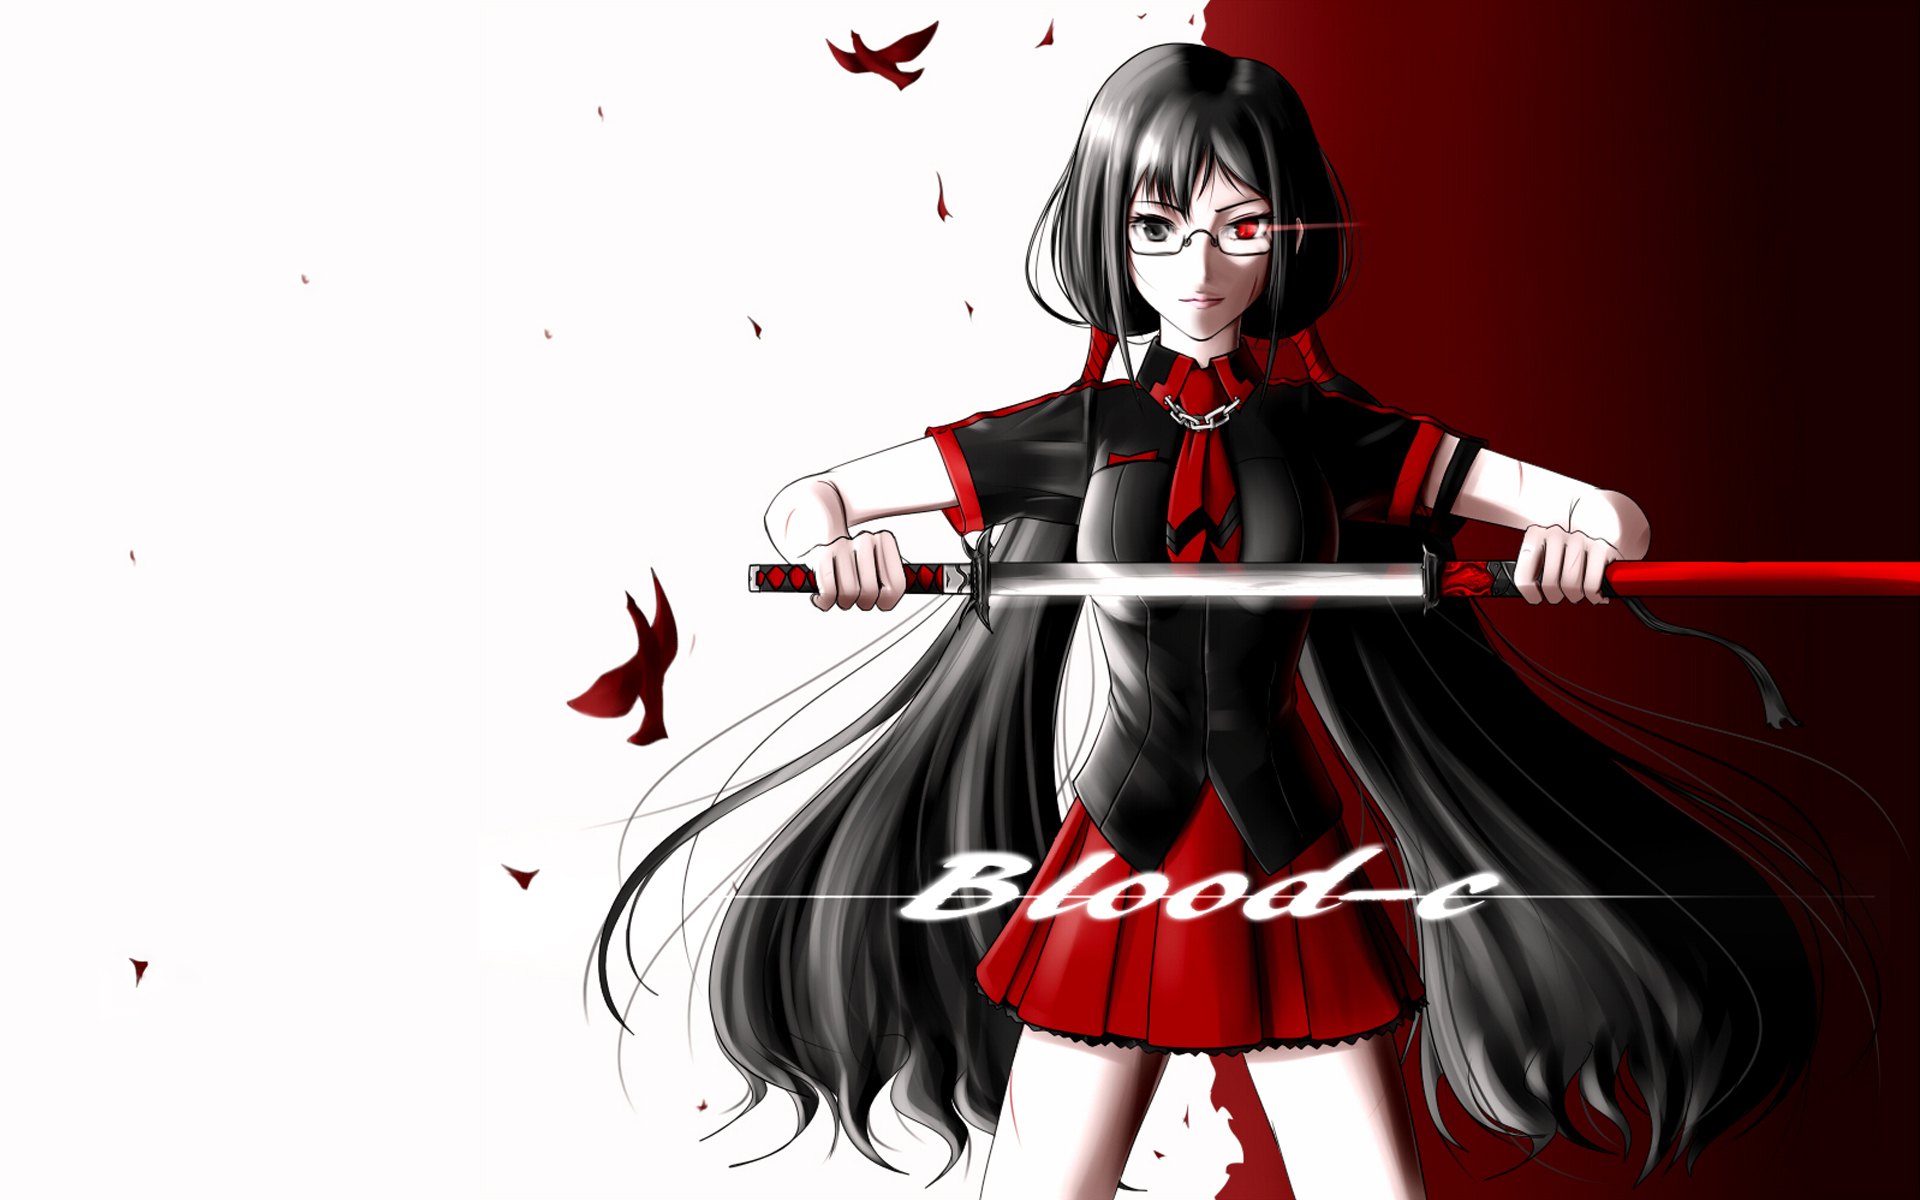 Blood-C #8